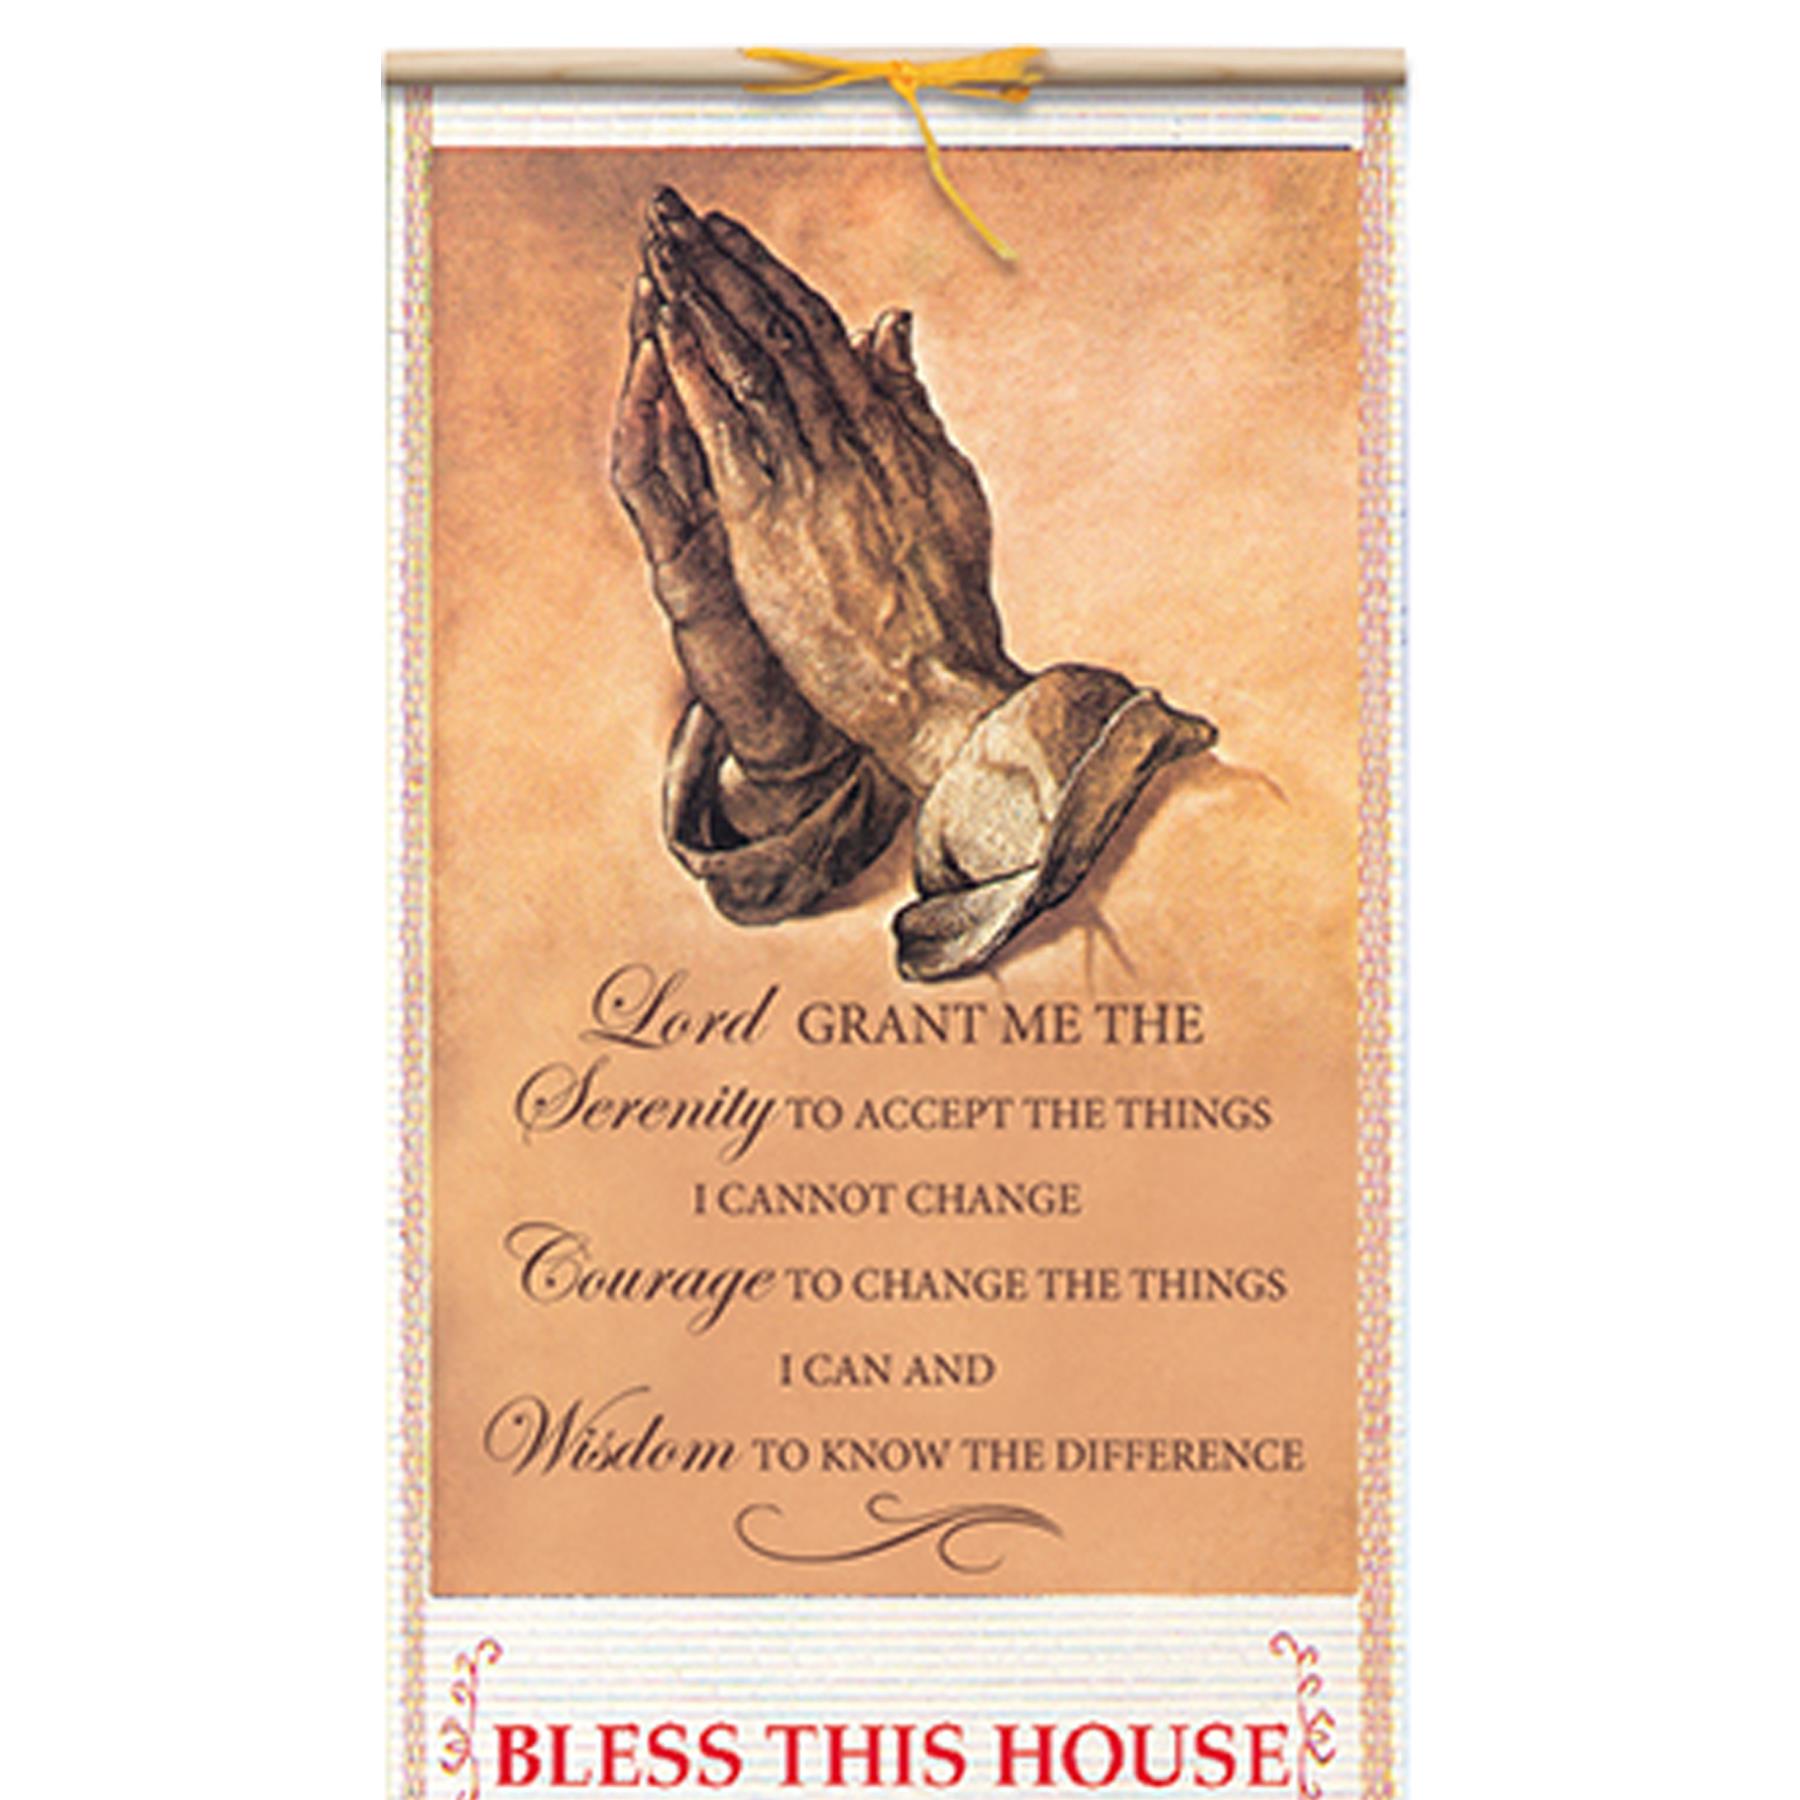 Religious Decorative Hanging Scroll 2024 Calendar - Serenity Prayer